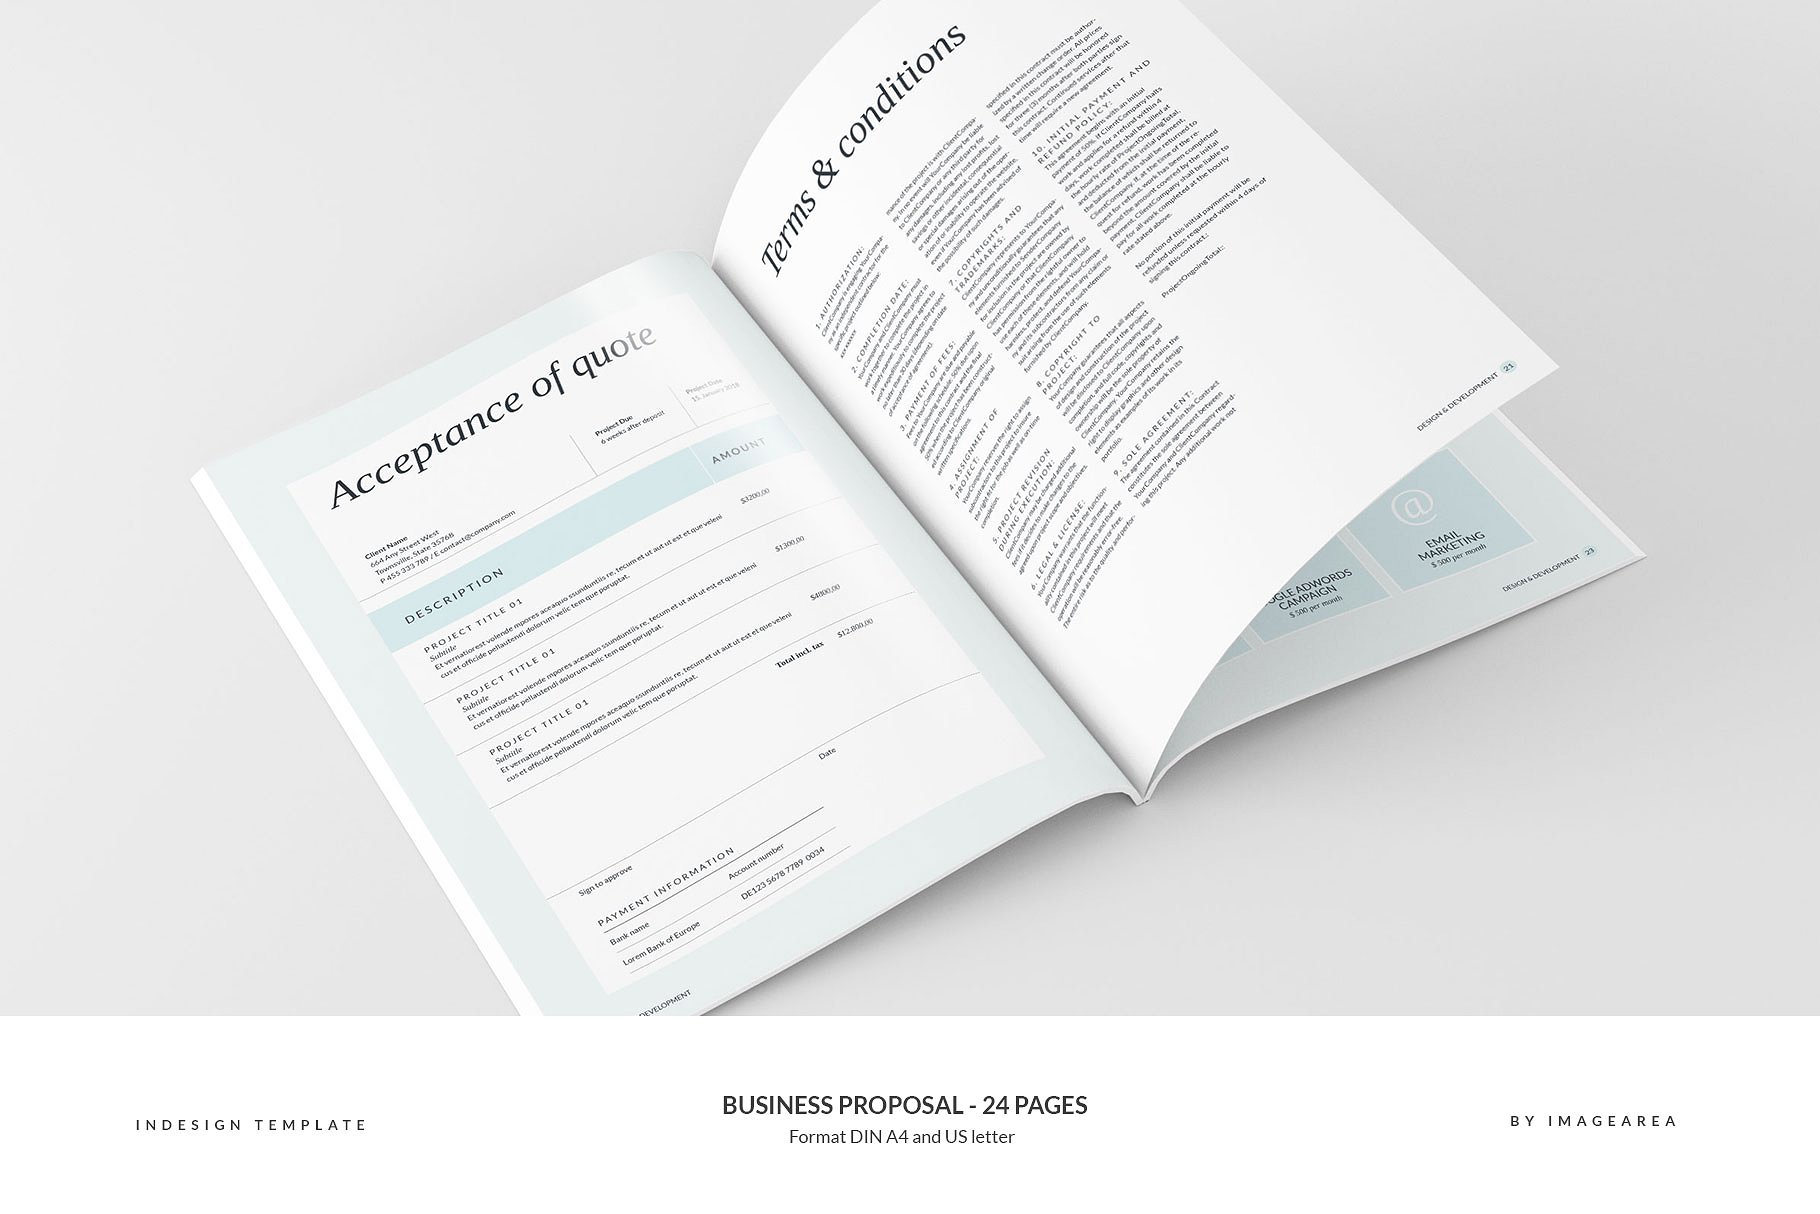 商业策划书计划书设计模板 Business Proposal – 24 pages插图(12)